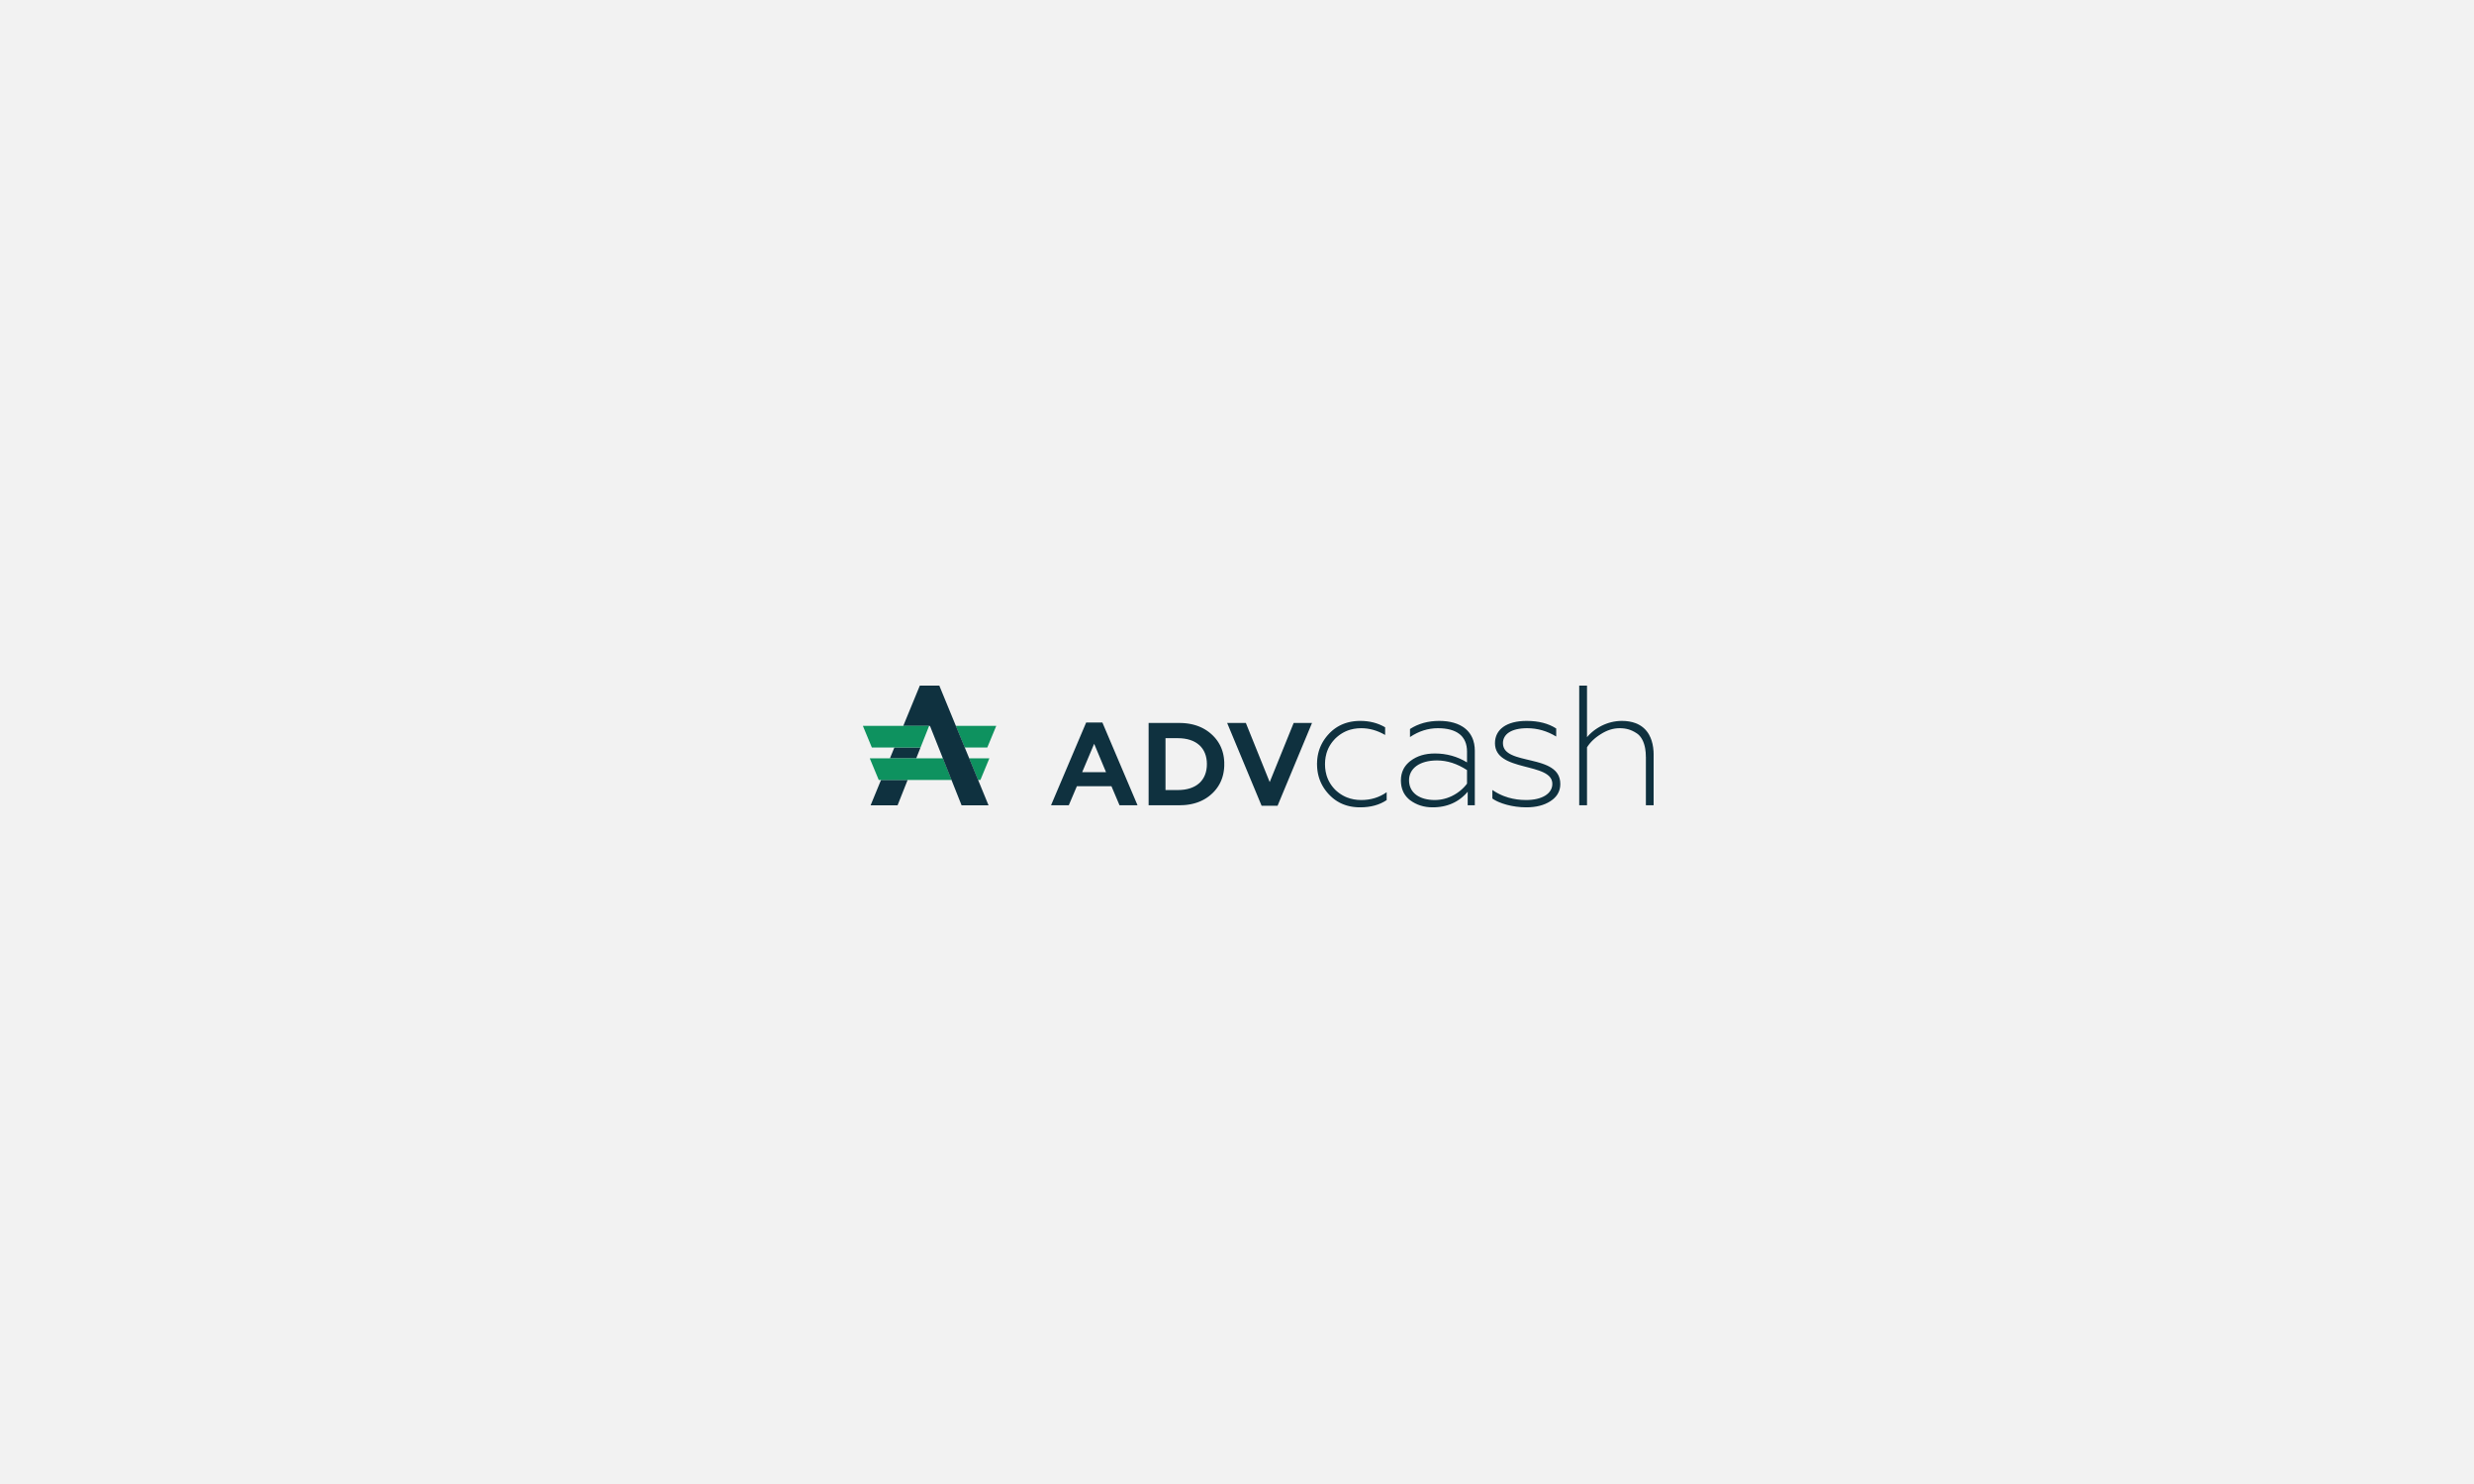 advcash logo design